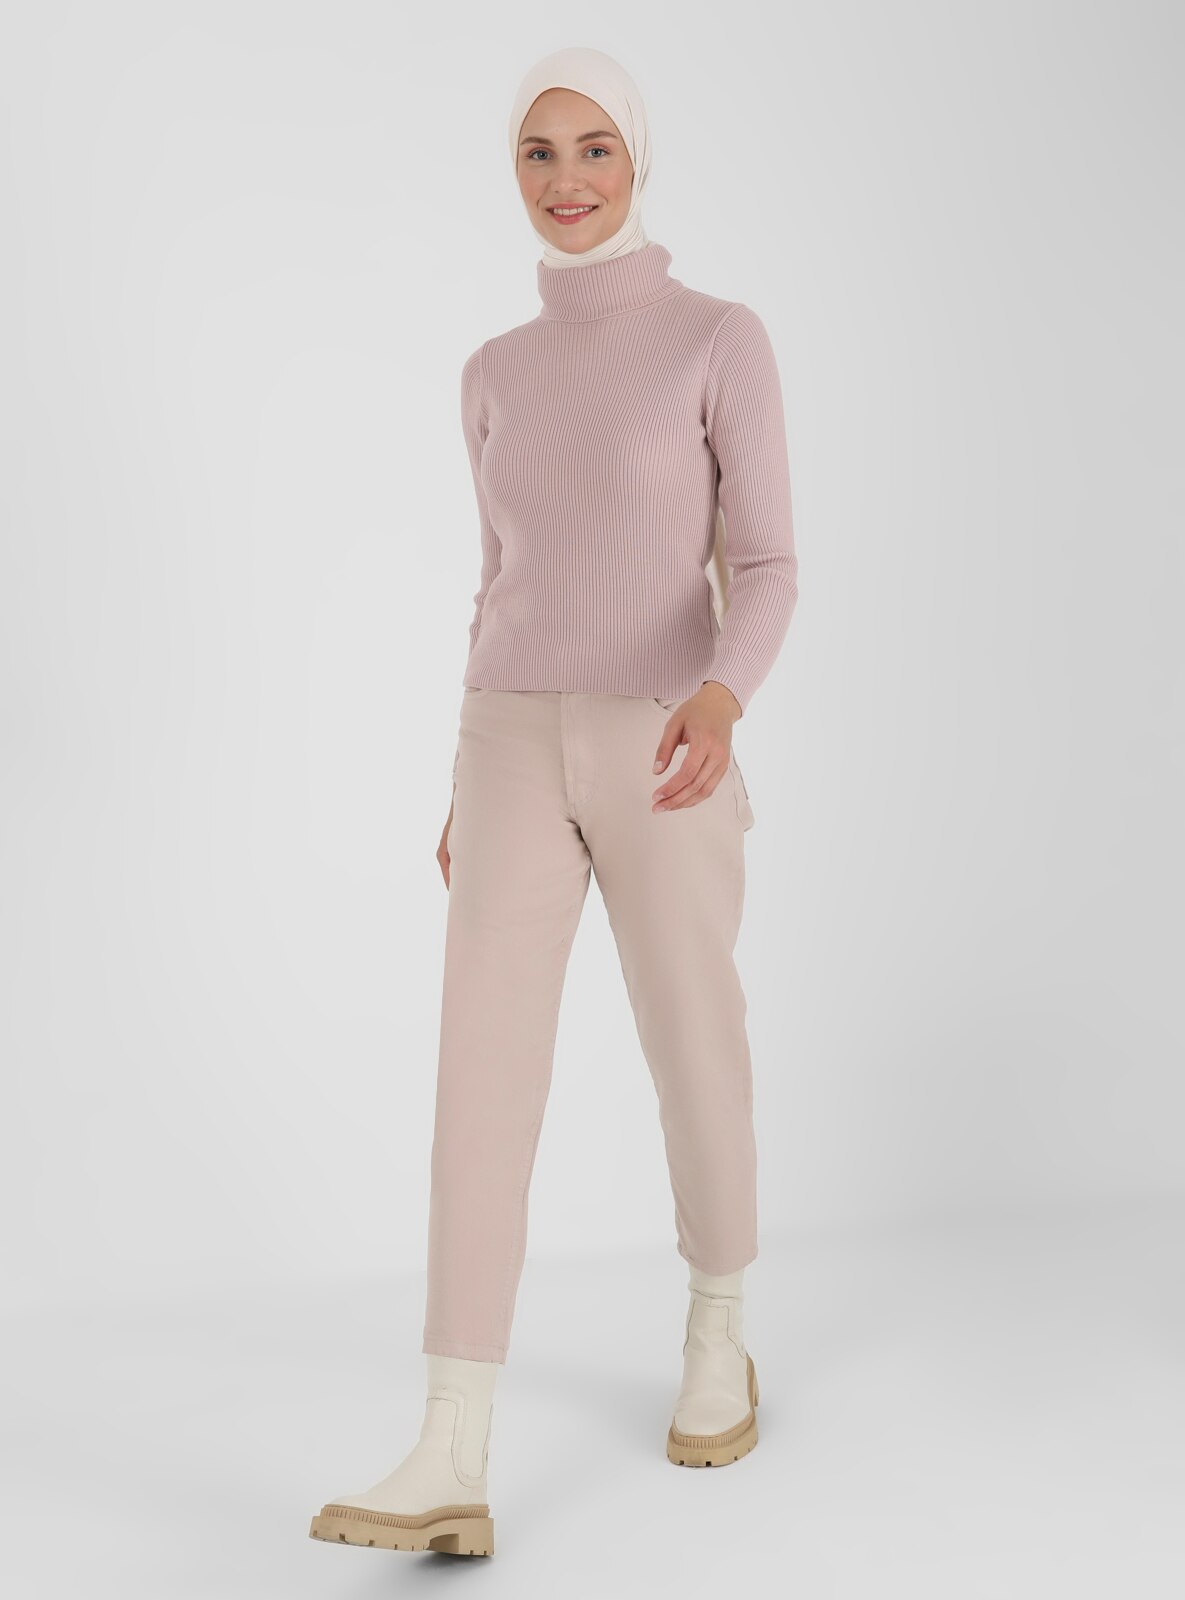 Turtleneck Sweater Pink